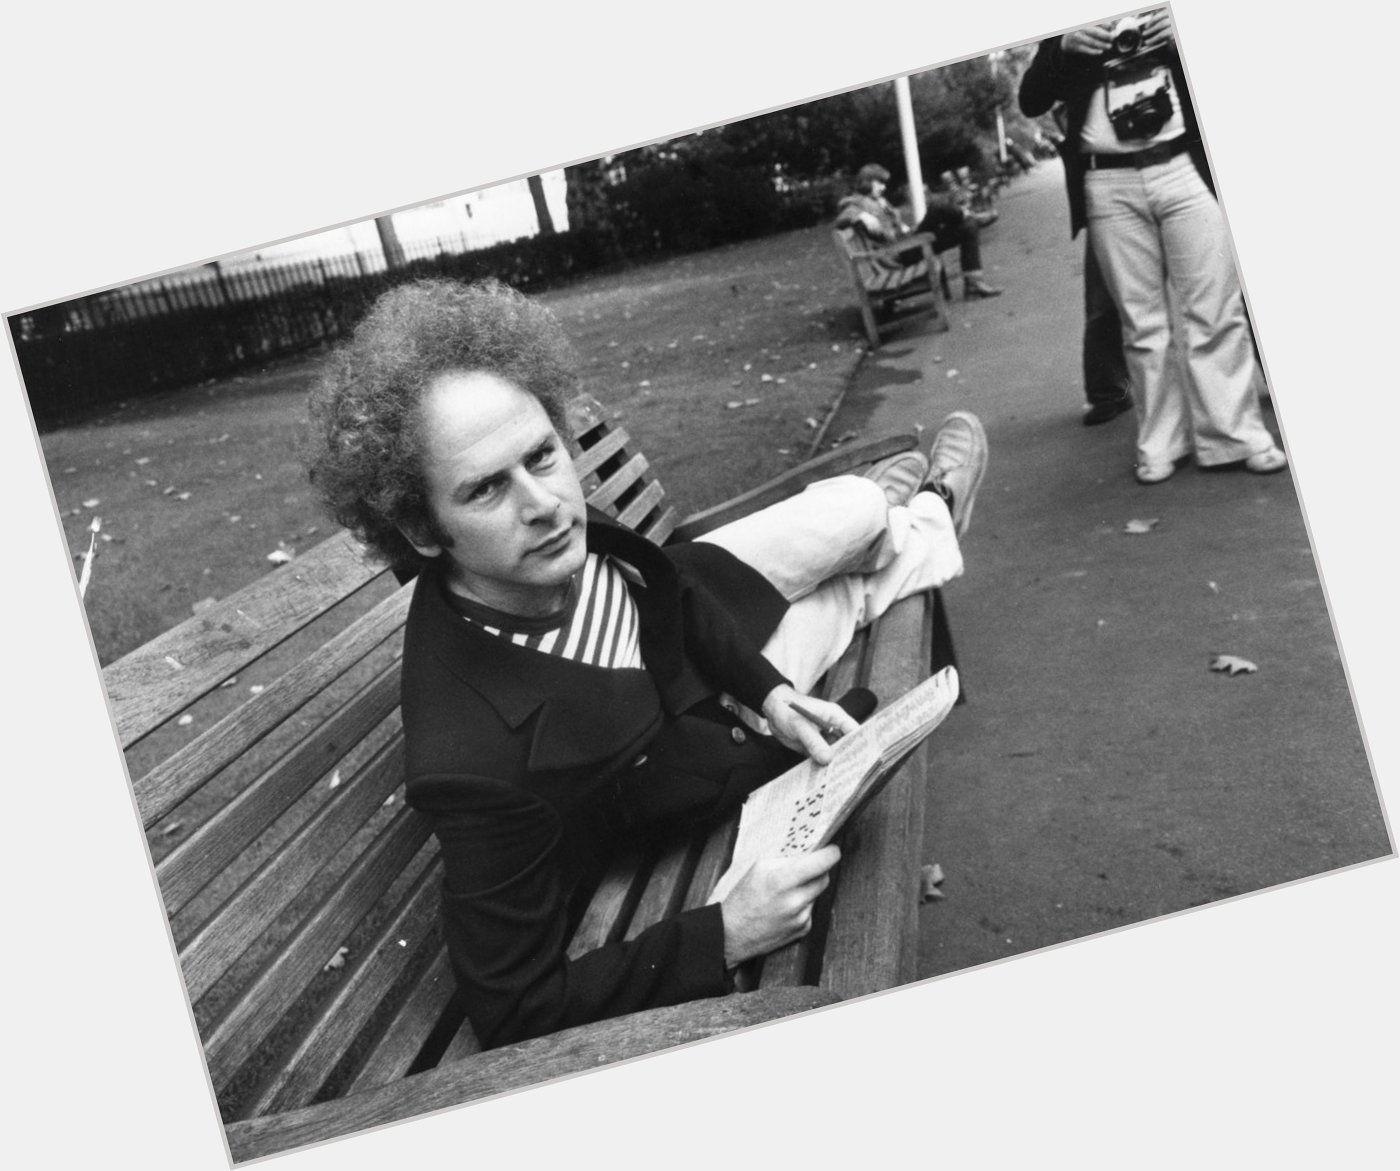 Happy Birthday Art Garfunkel!     